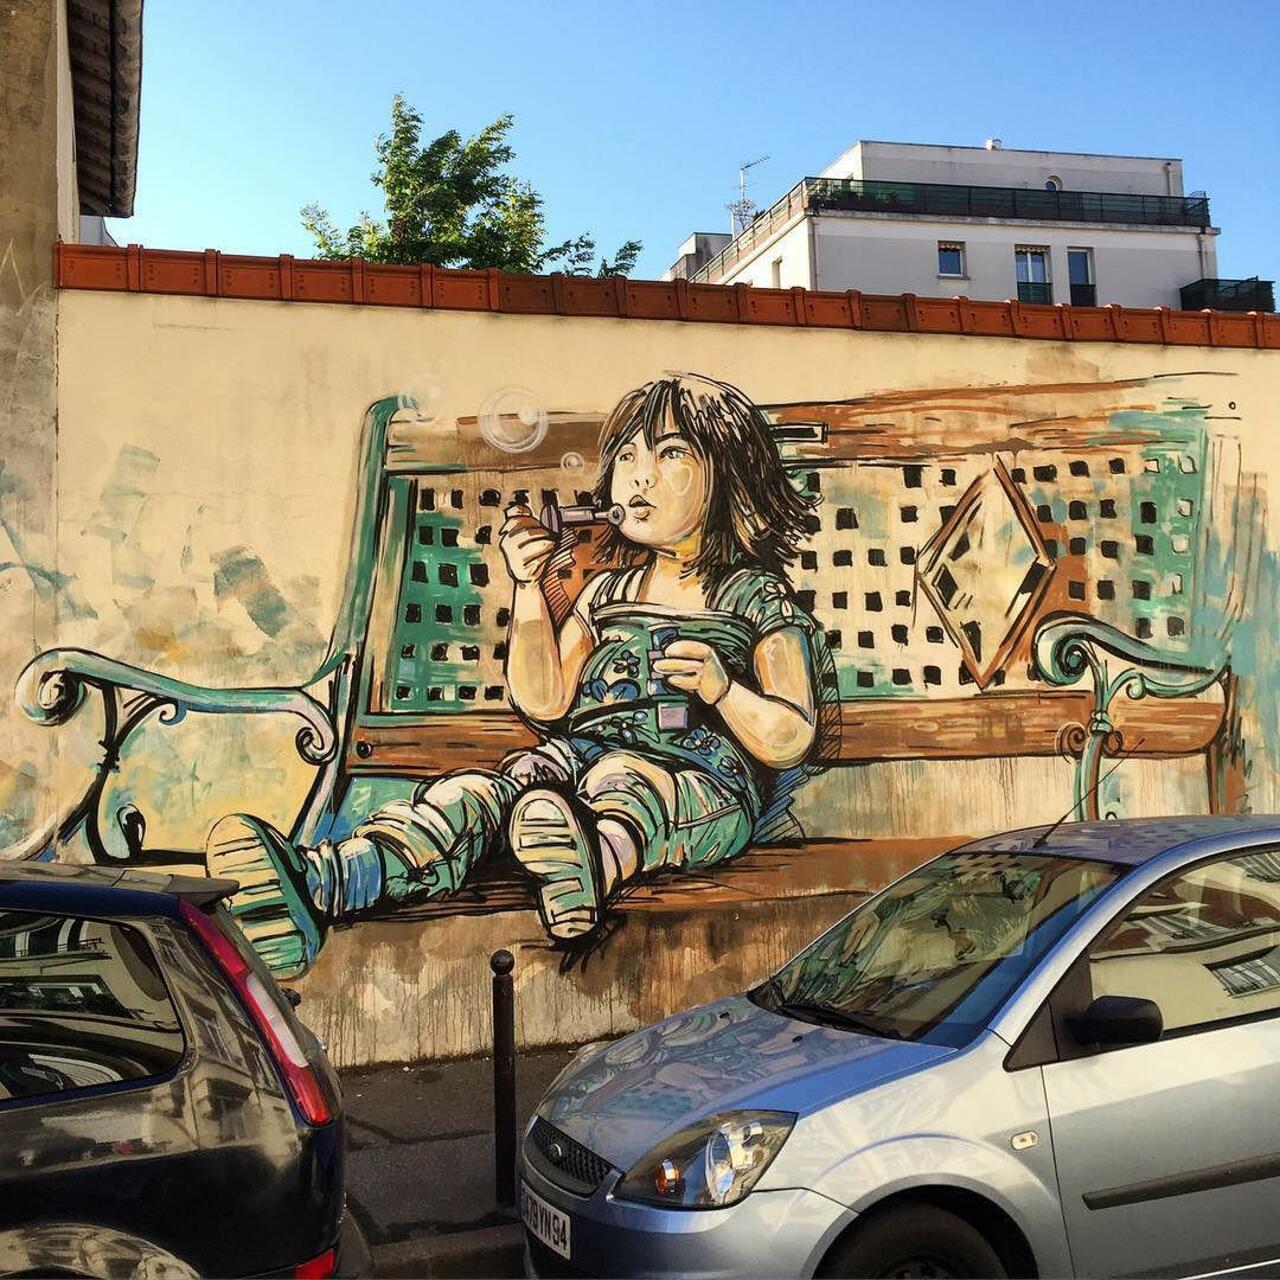 #Paris #graffiti photo by @jeanlucr http://ift.tt/1PyzeJw #StreetArt http://t.co/SRCUxxQRes